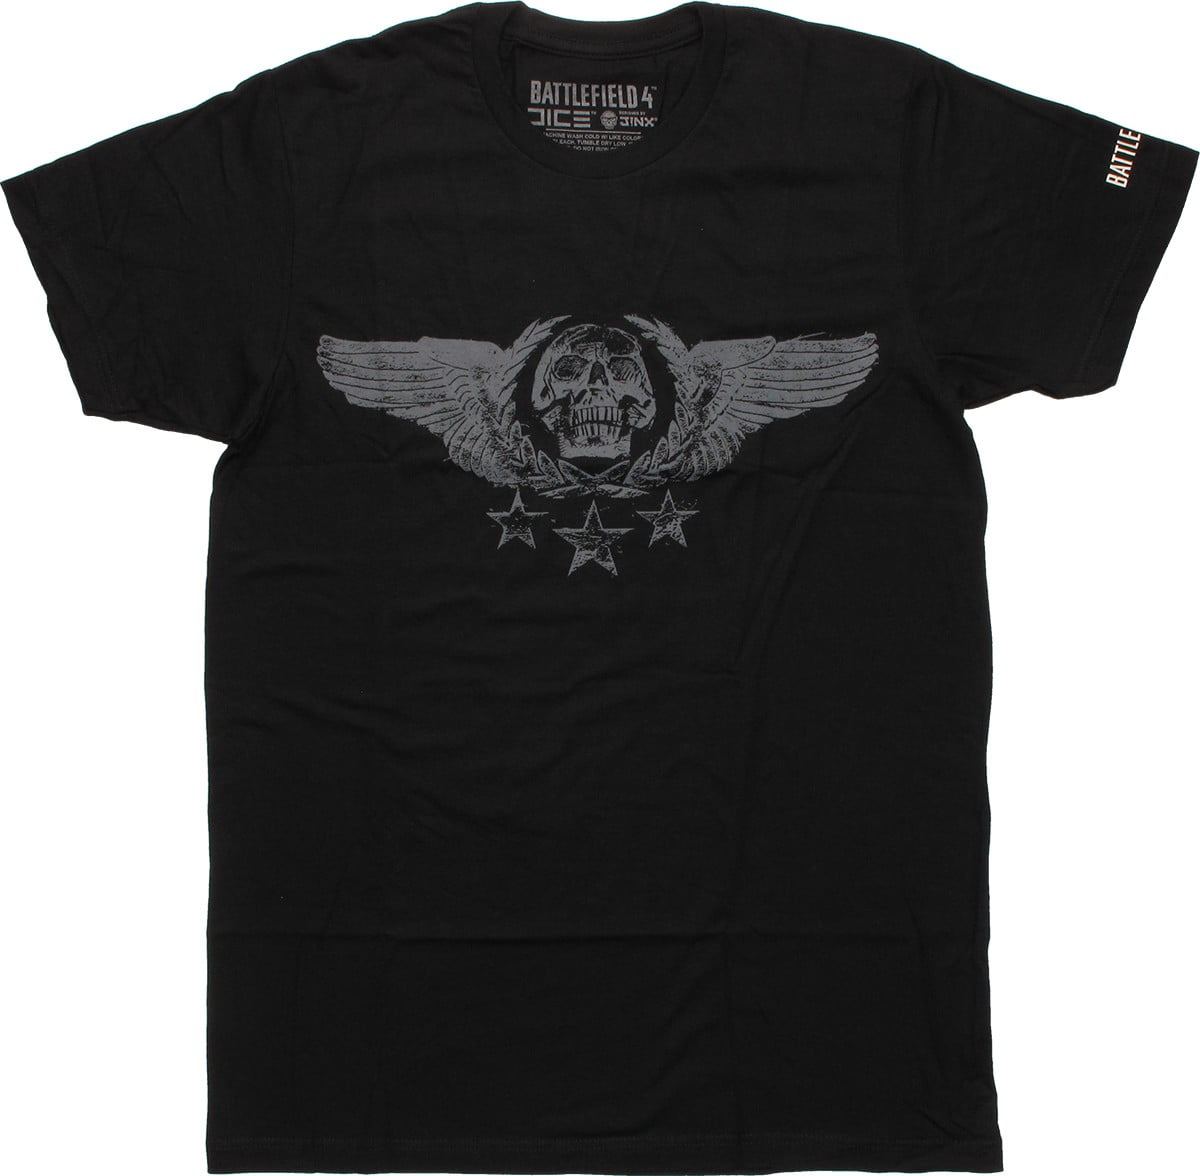 Battlefield 4 Skull Wings T-Shirt - Walmart.com